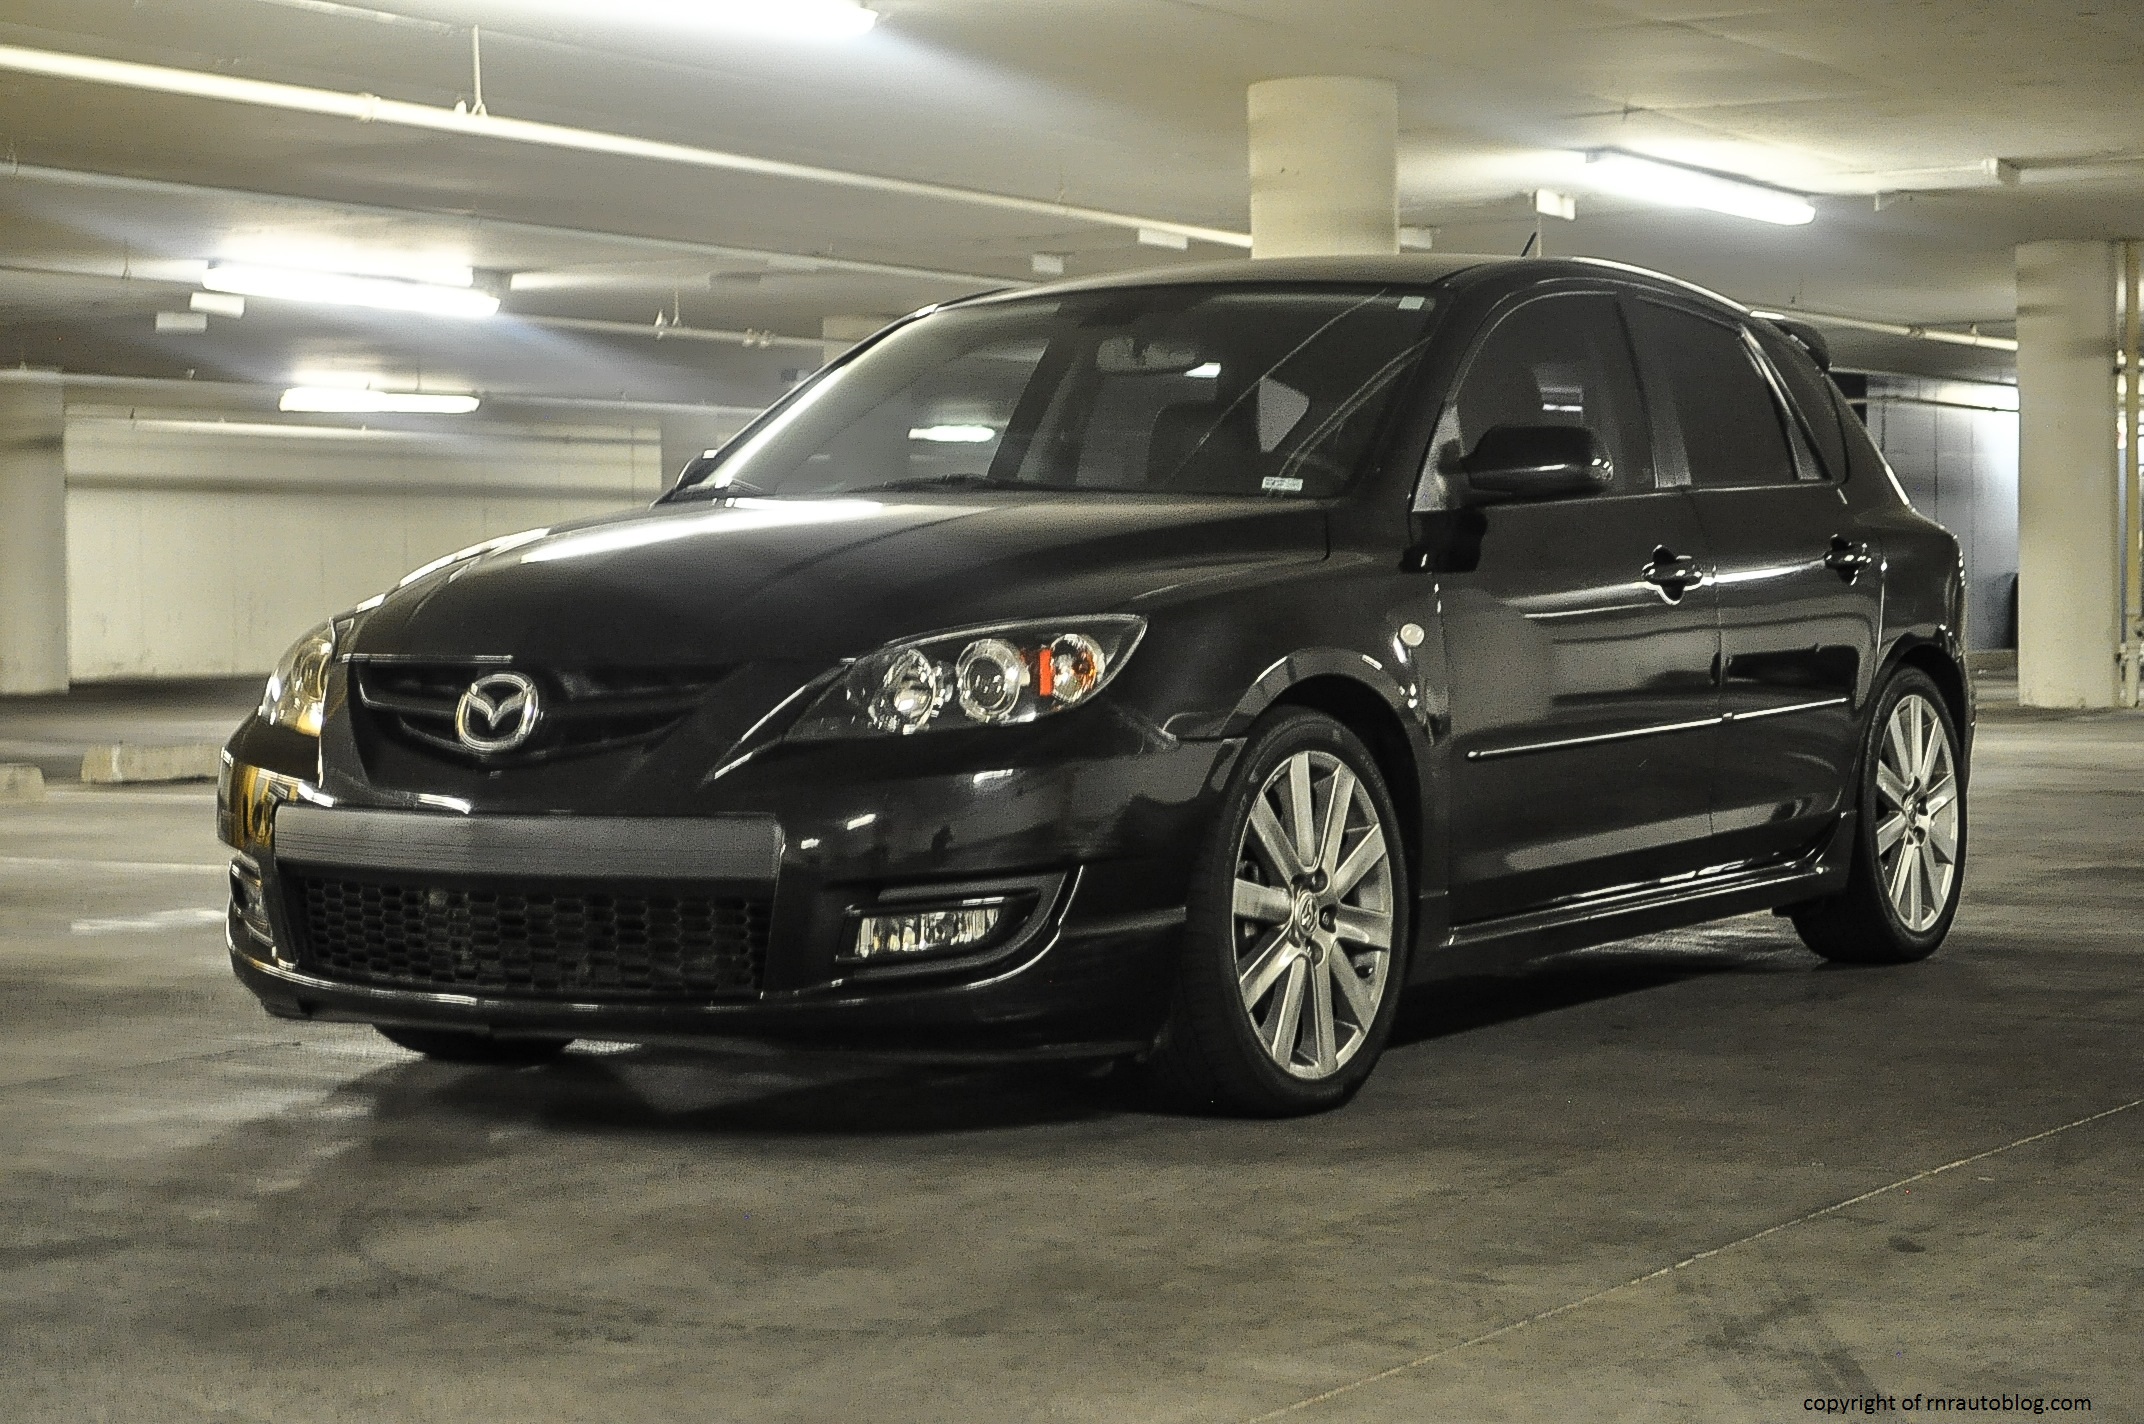 2008 MazdaSpeed3 Review | RNR Automotive Blog